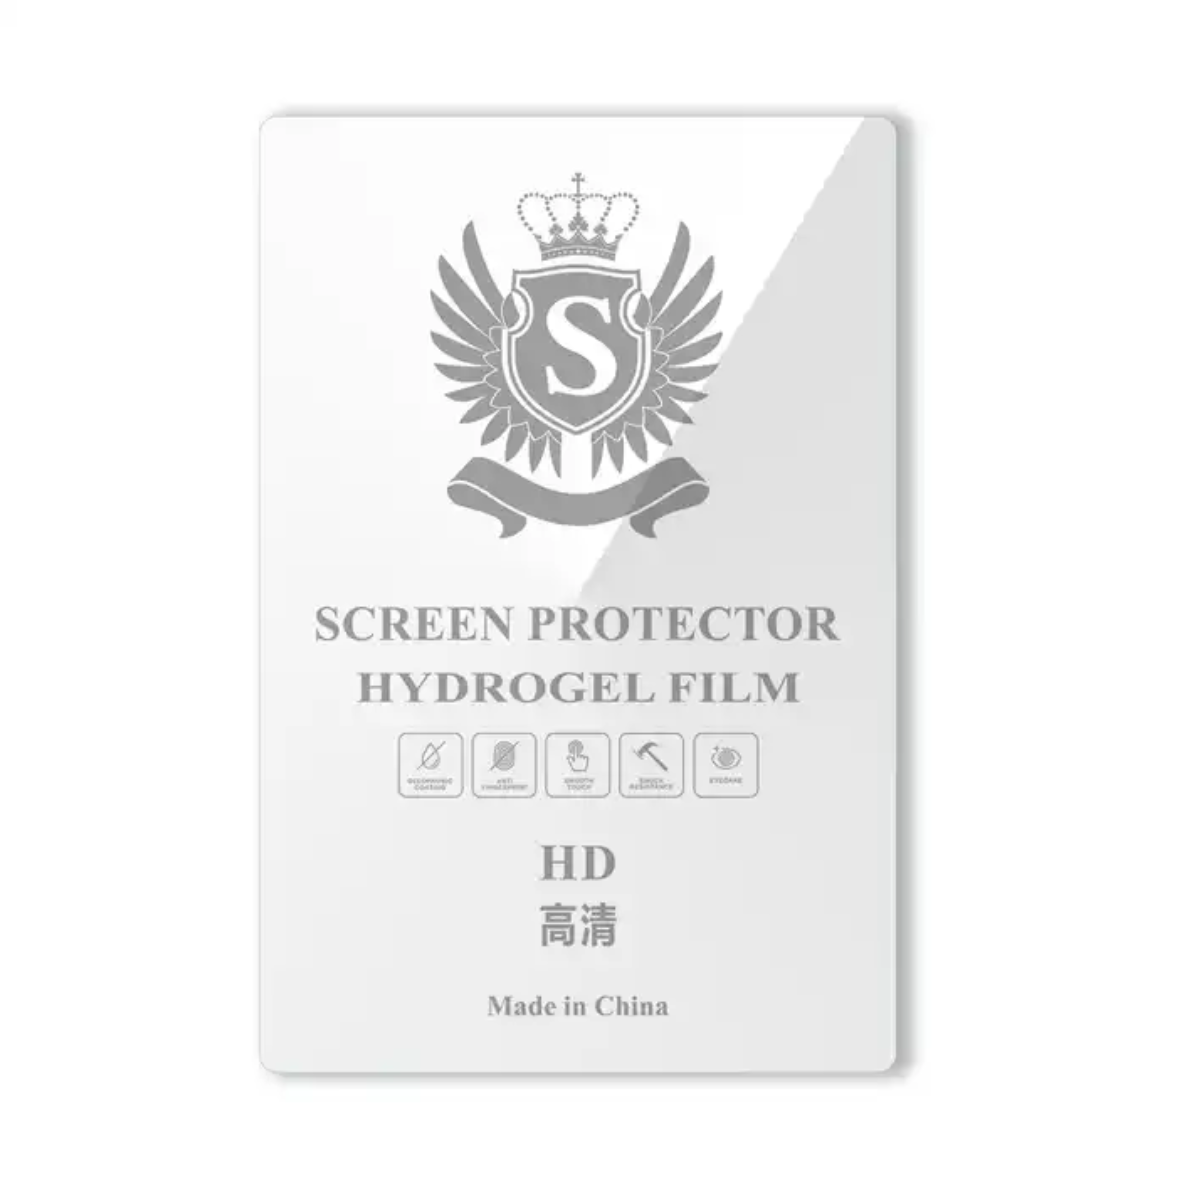 Screen Protector Hydrogel Film HD - Phone